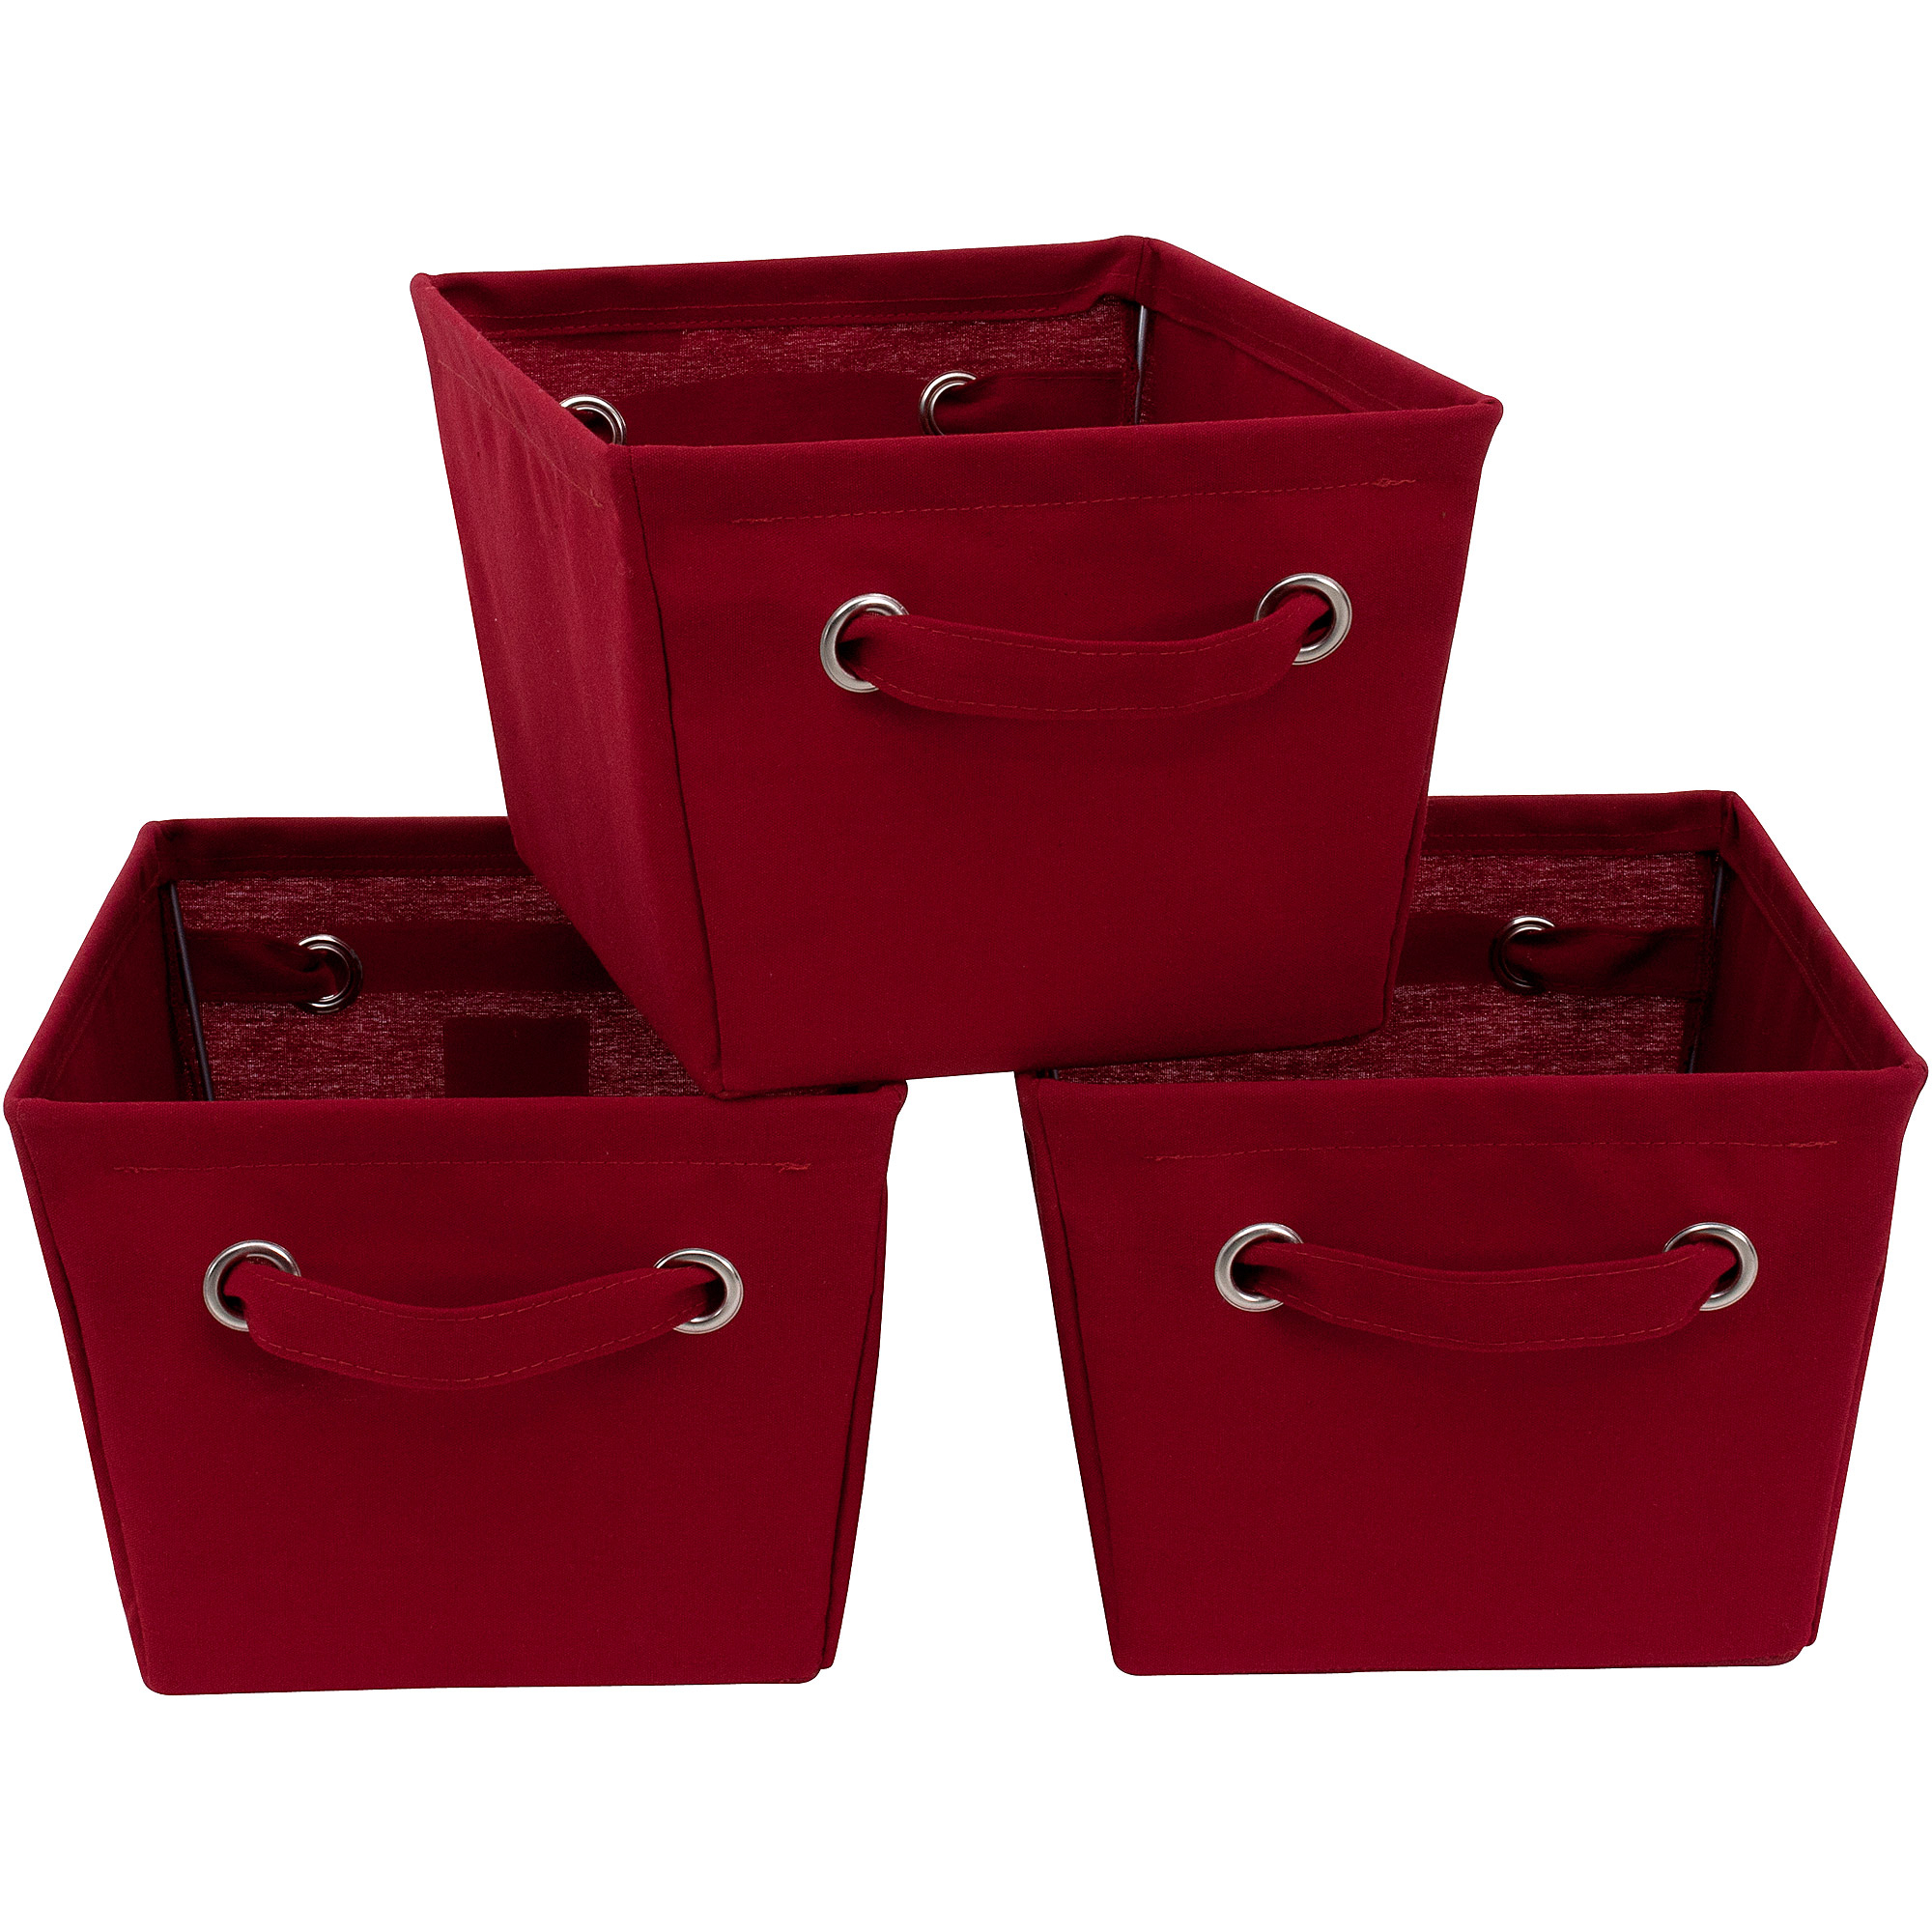 Mainstays 3 Pack Medium Canvas Bins Red Sedona Walmart throughout proportions 2000 X 2000